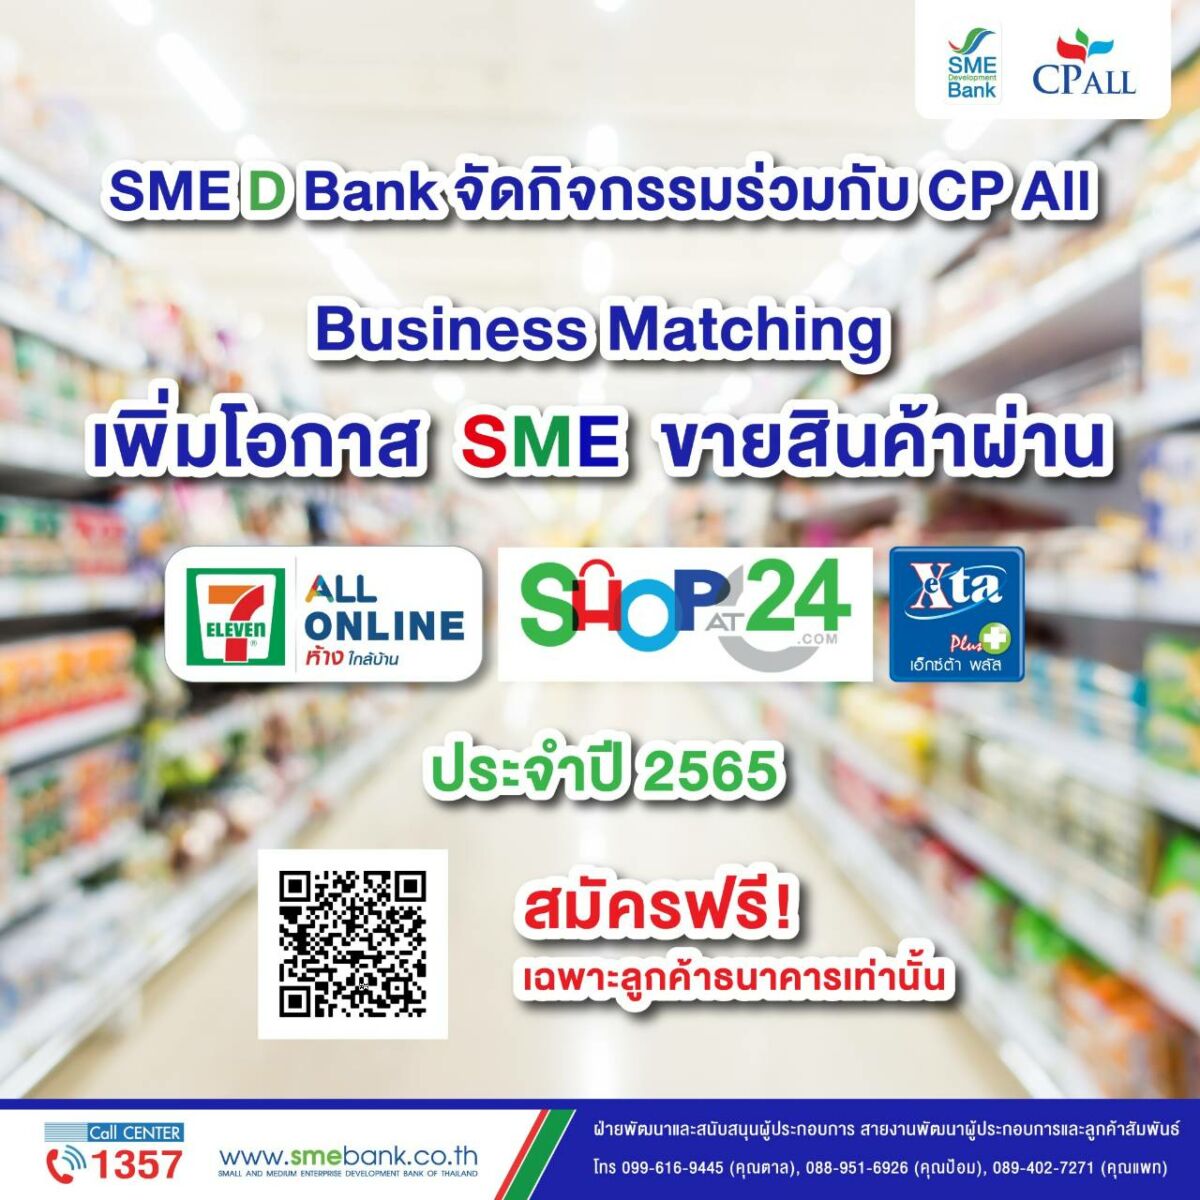 SME D Bank CP All